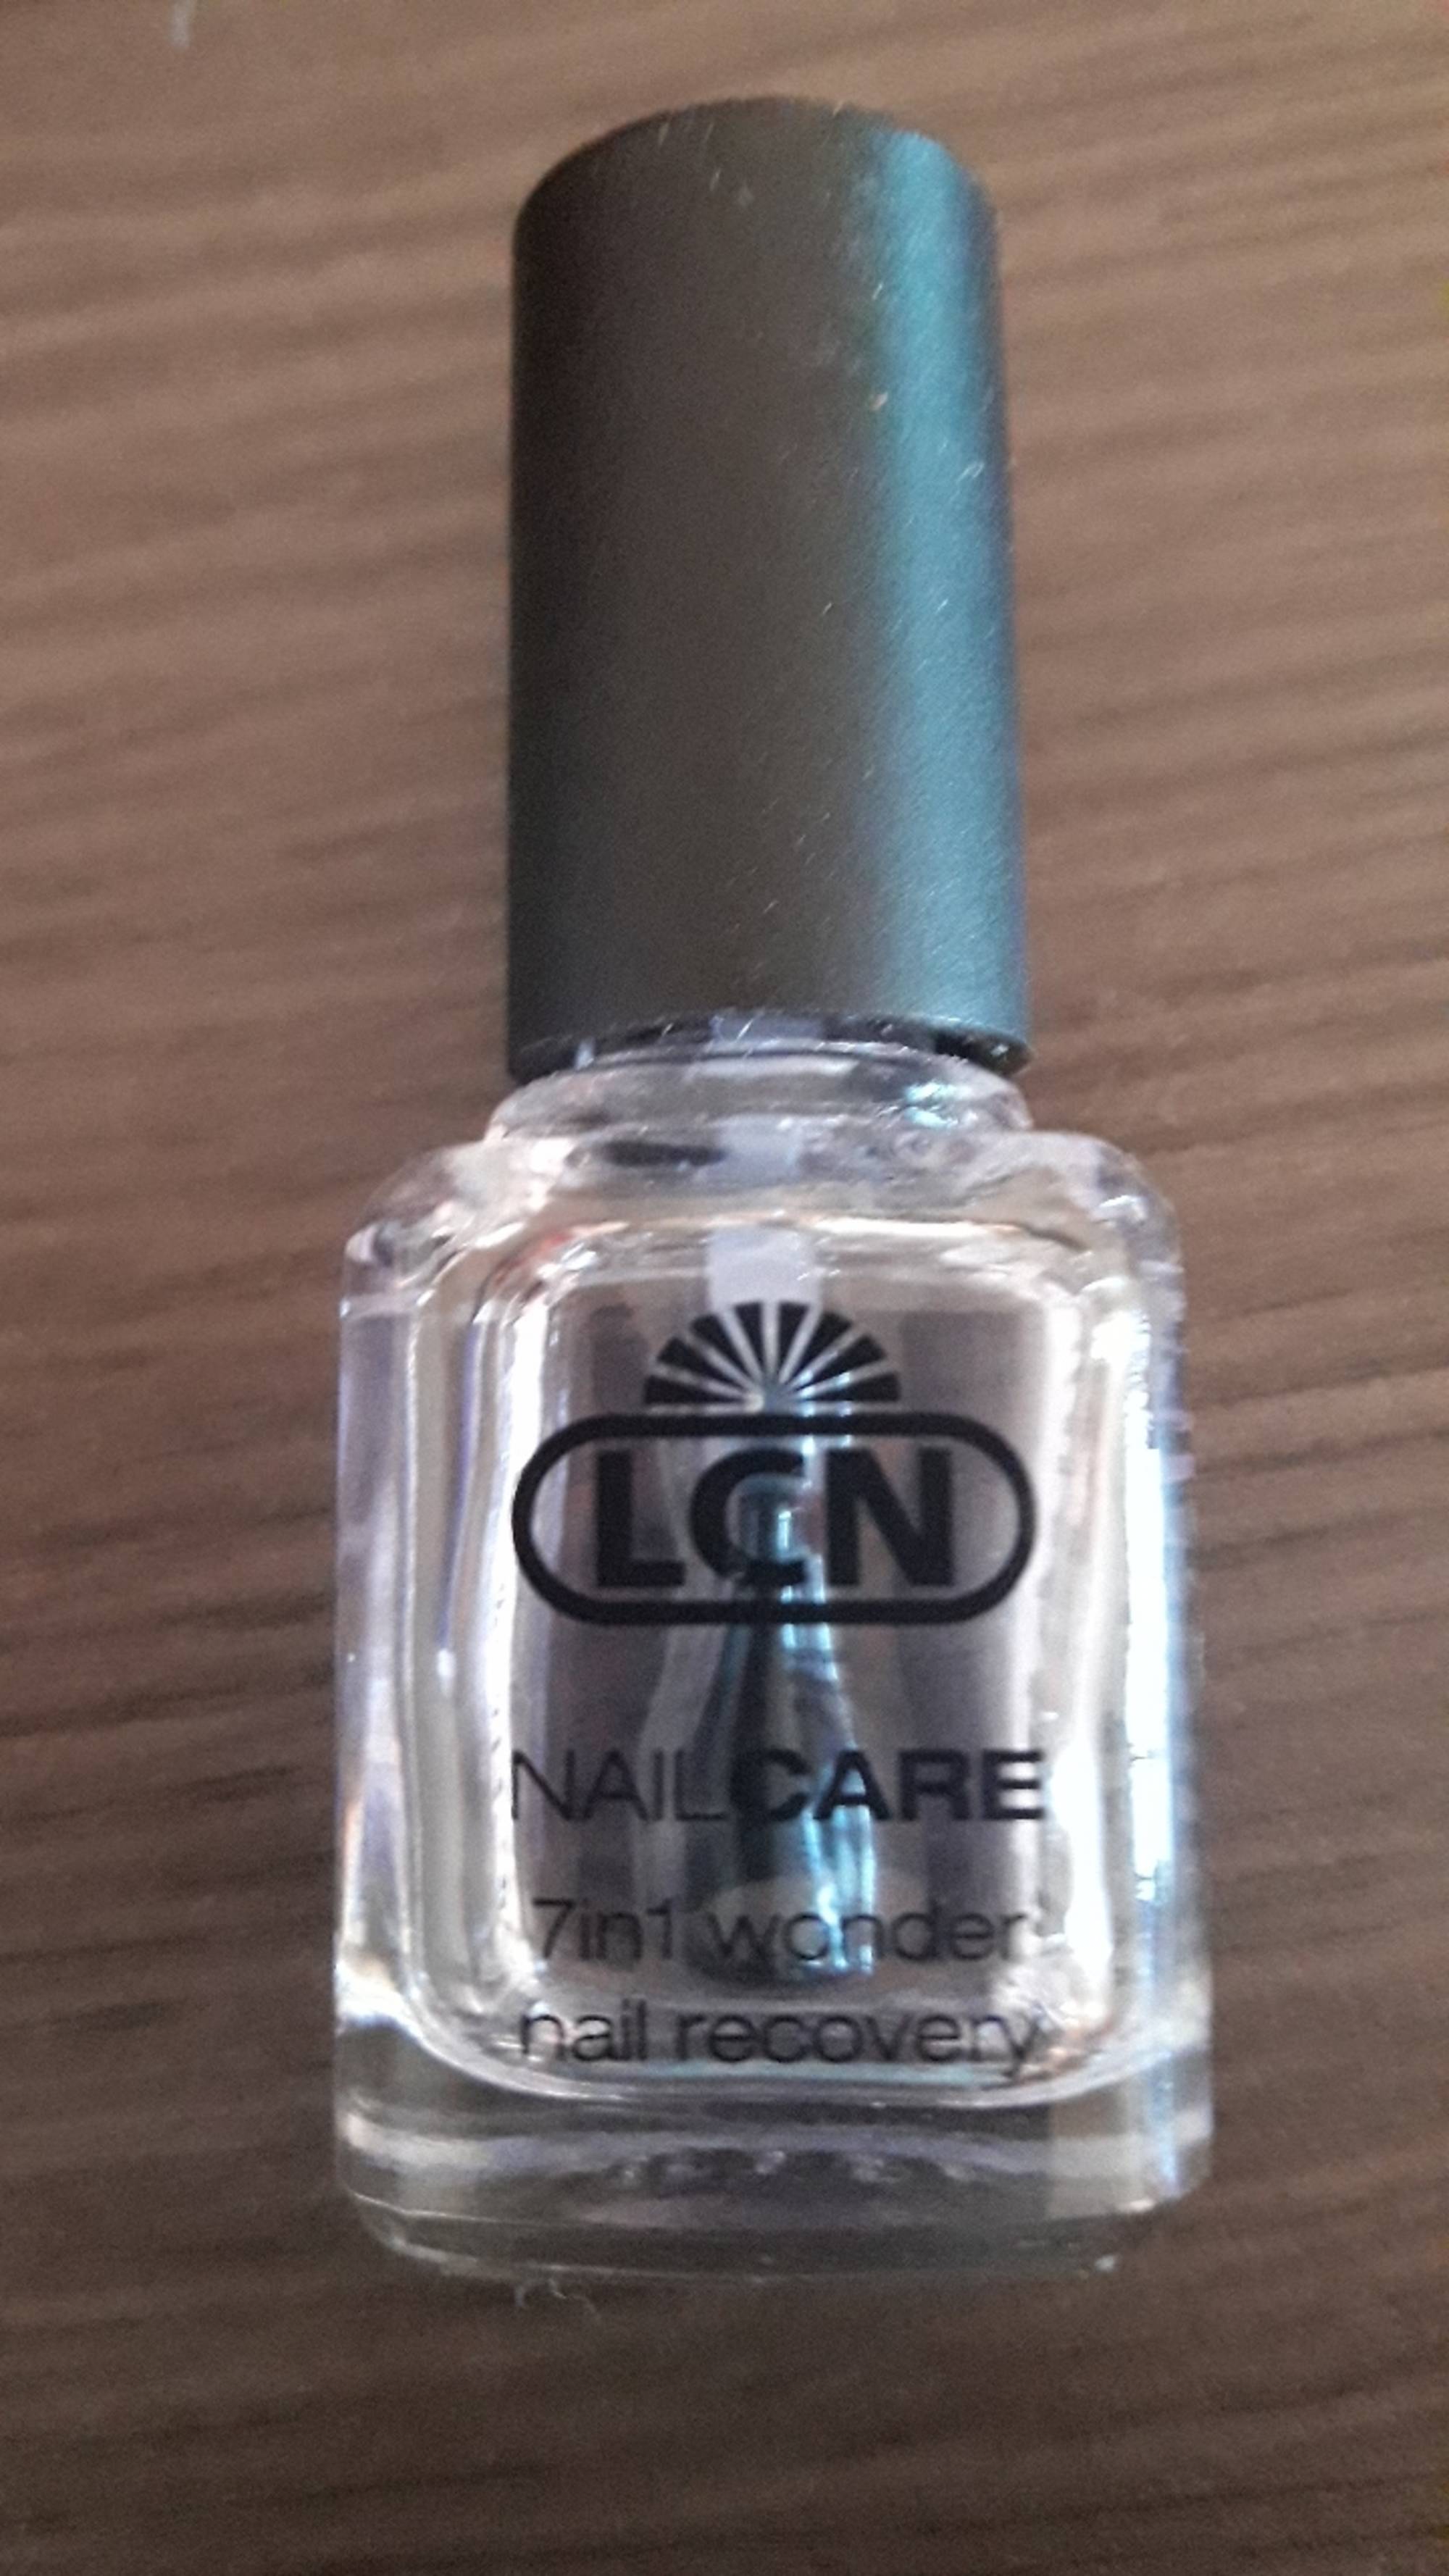 LCN - Nail care